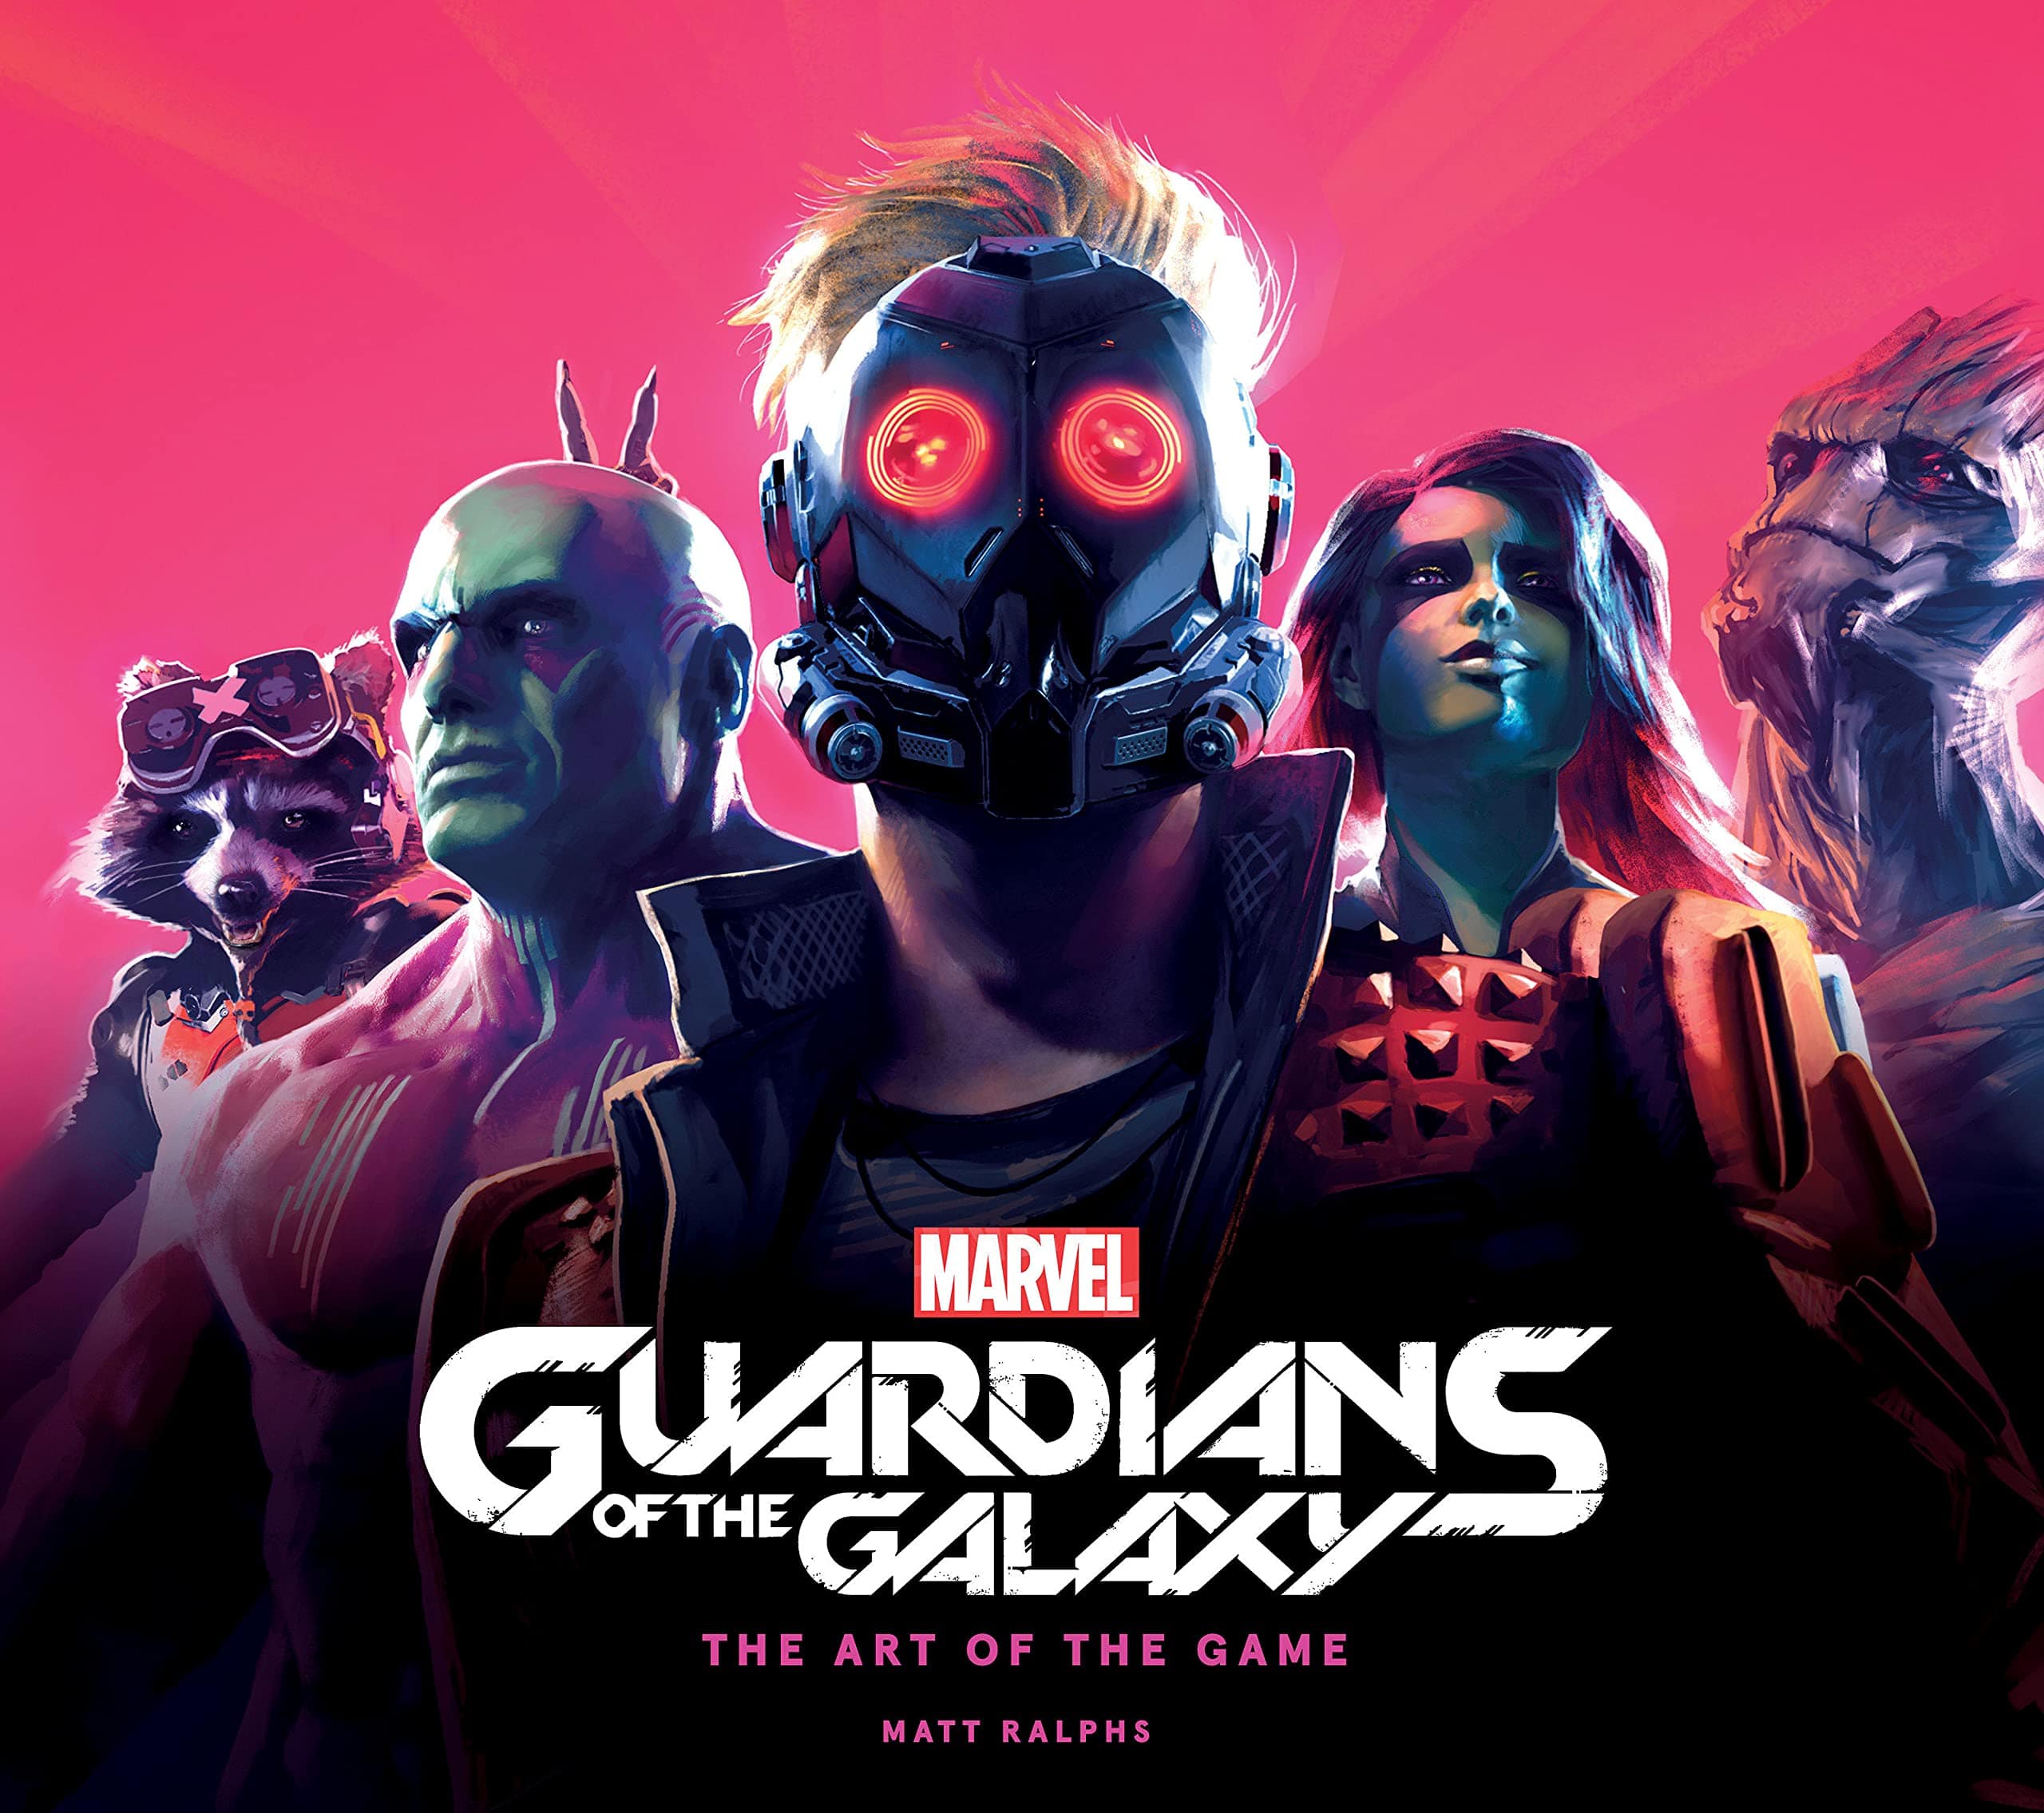 Marvel's Guardians of the Galaxy ستحصل على كتيّب الرسومات الخاص بها